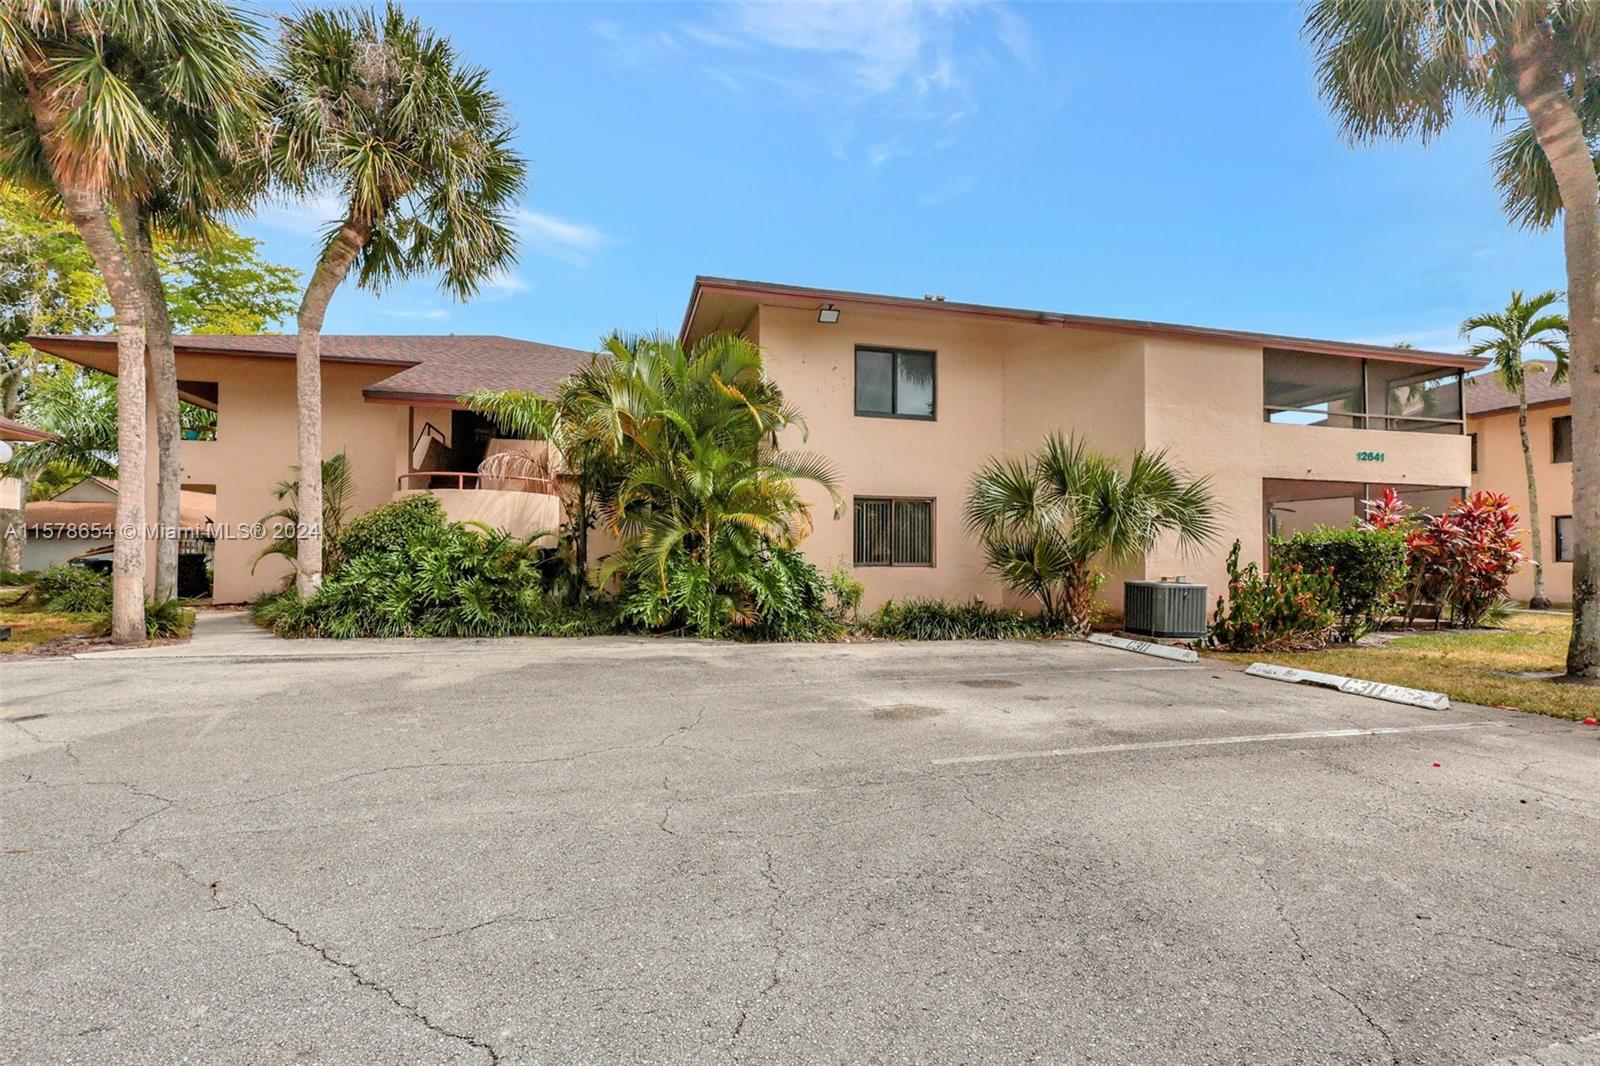 Rental Property at 12641 Westhampton Cir Cir C311, Wellington, Palm Beach County, Florida - Bedrooms: 3 
Bathrooms: 3  - $2,800 MO.